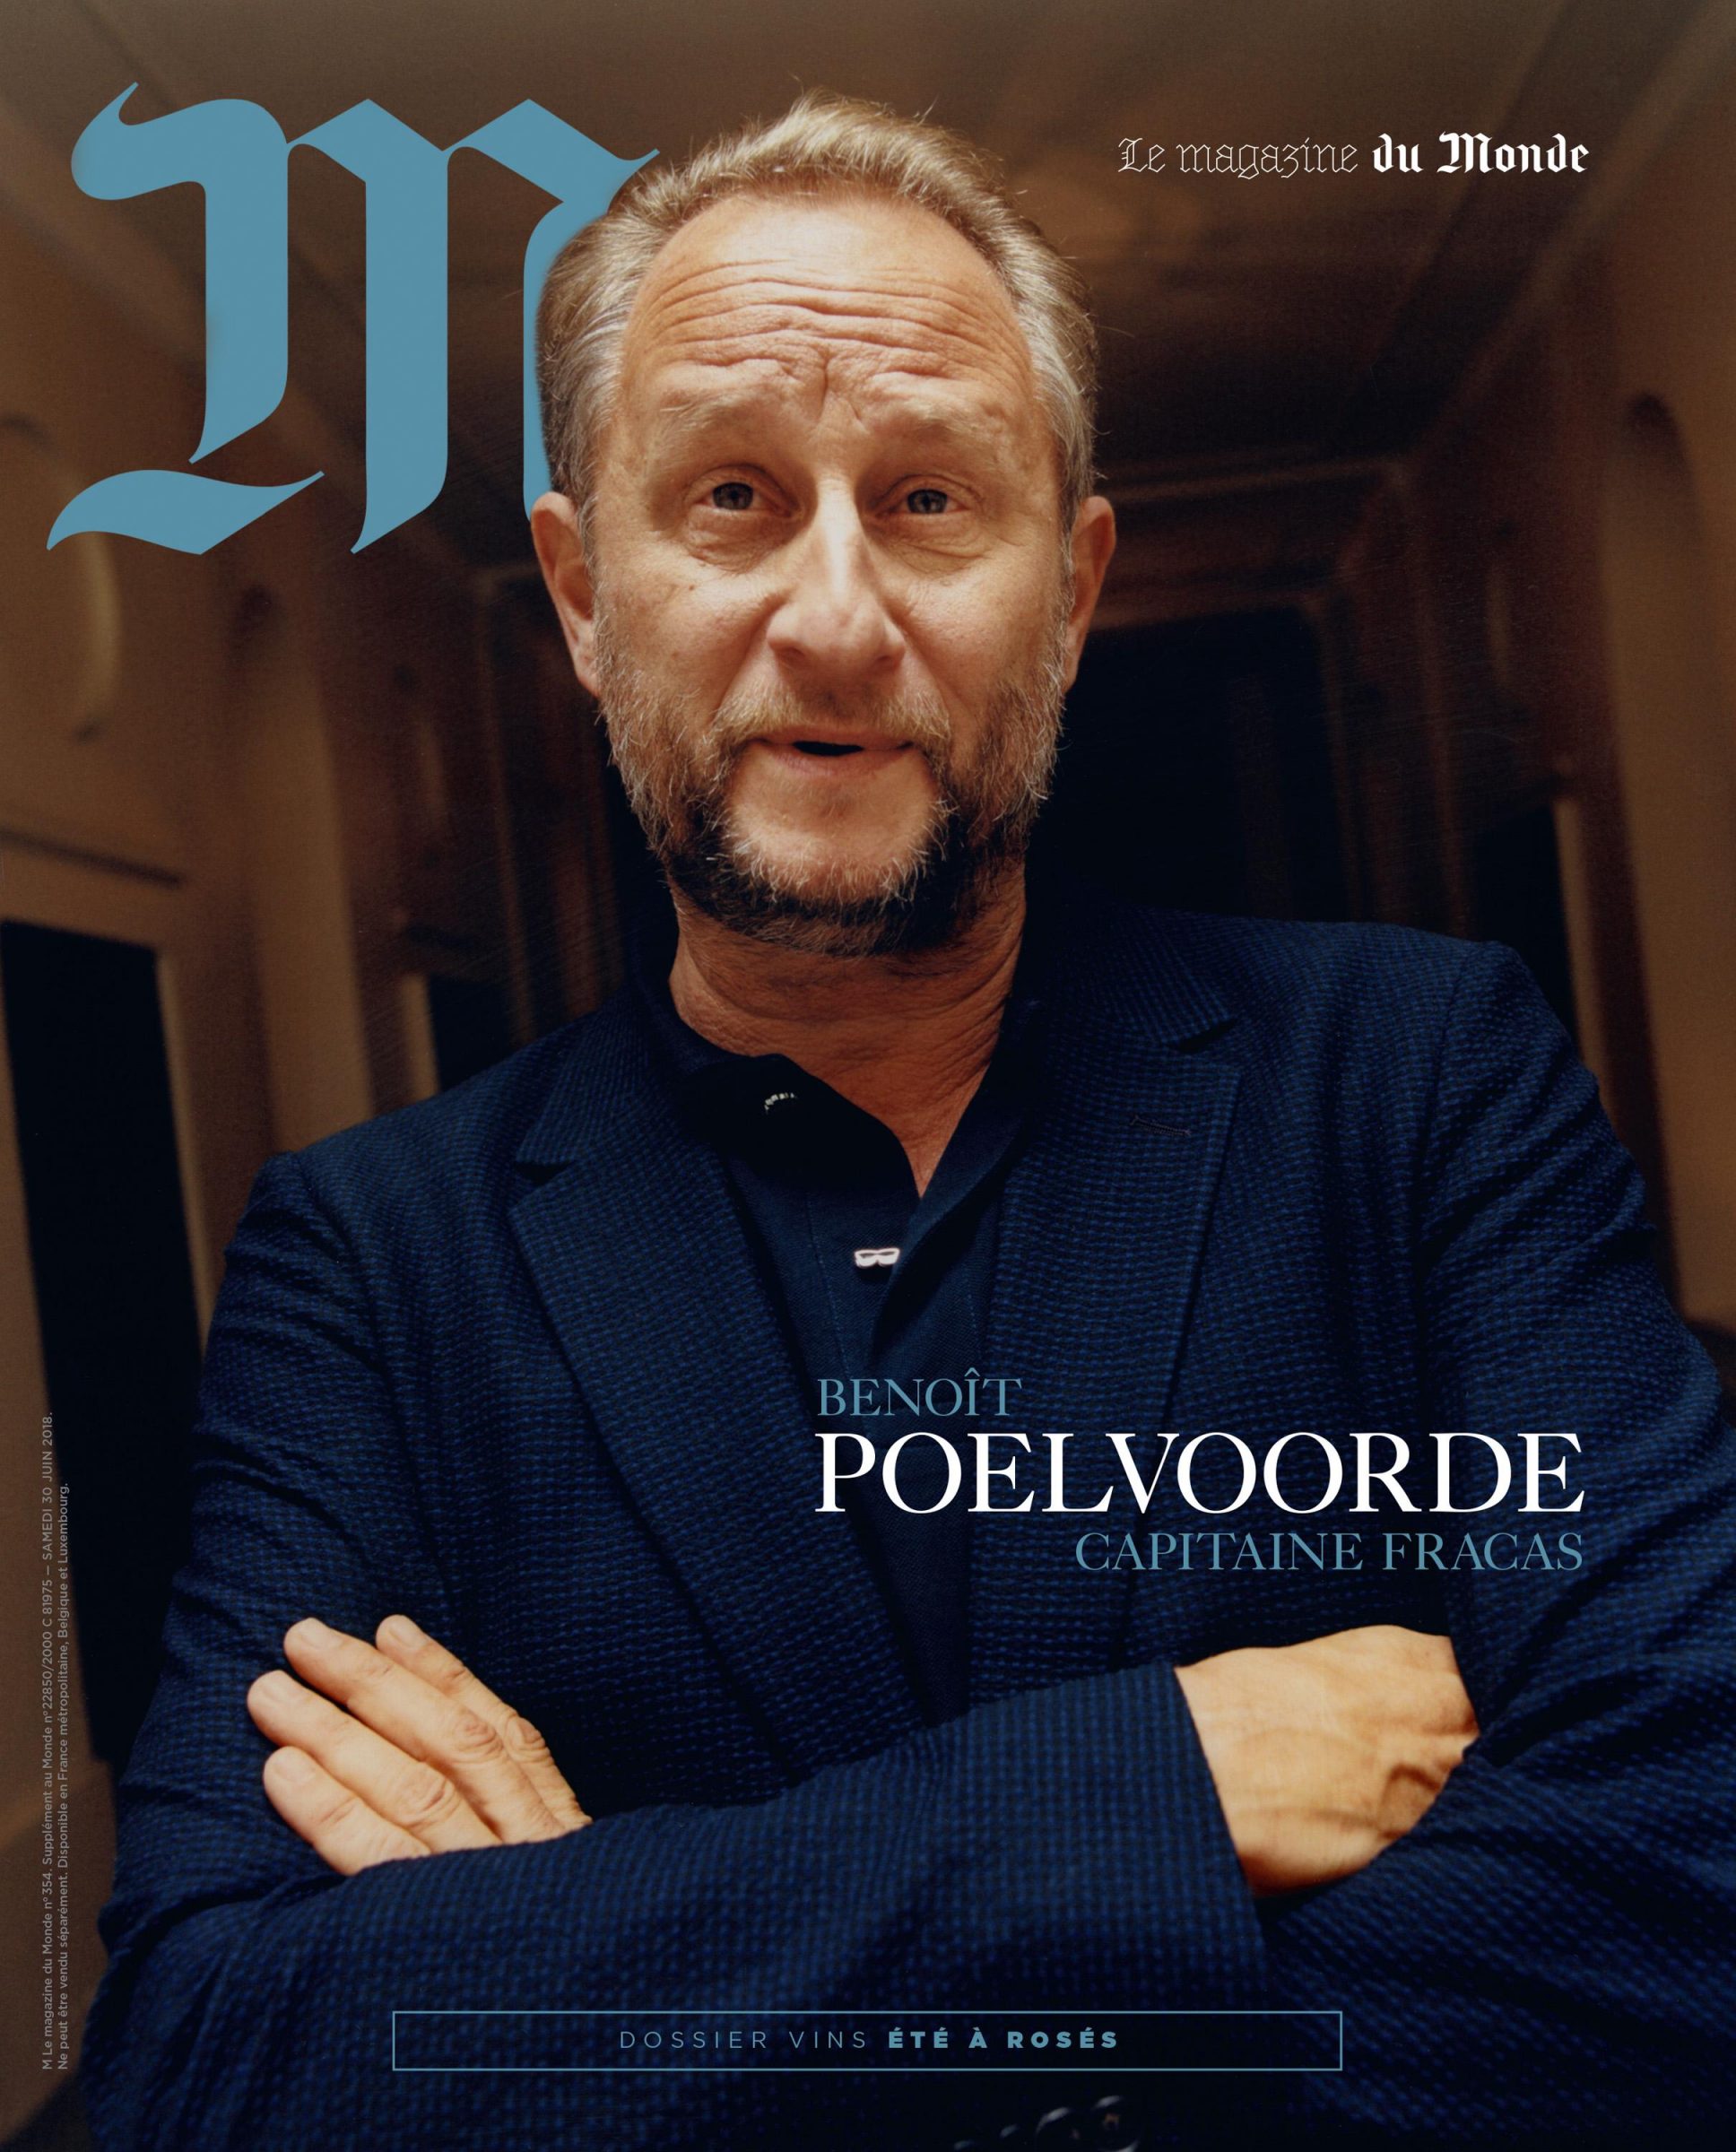 Benoit Poelvoorde, M le Monde, Paris, 2018 - © Maciek Pożoga